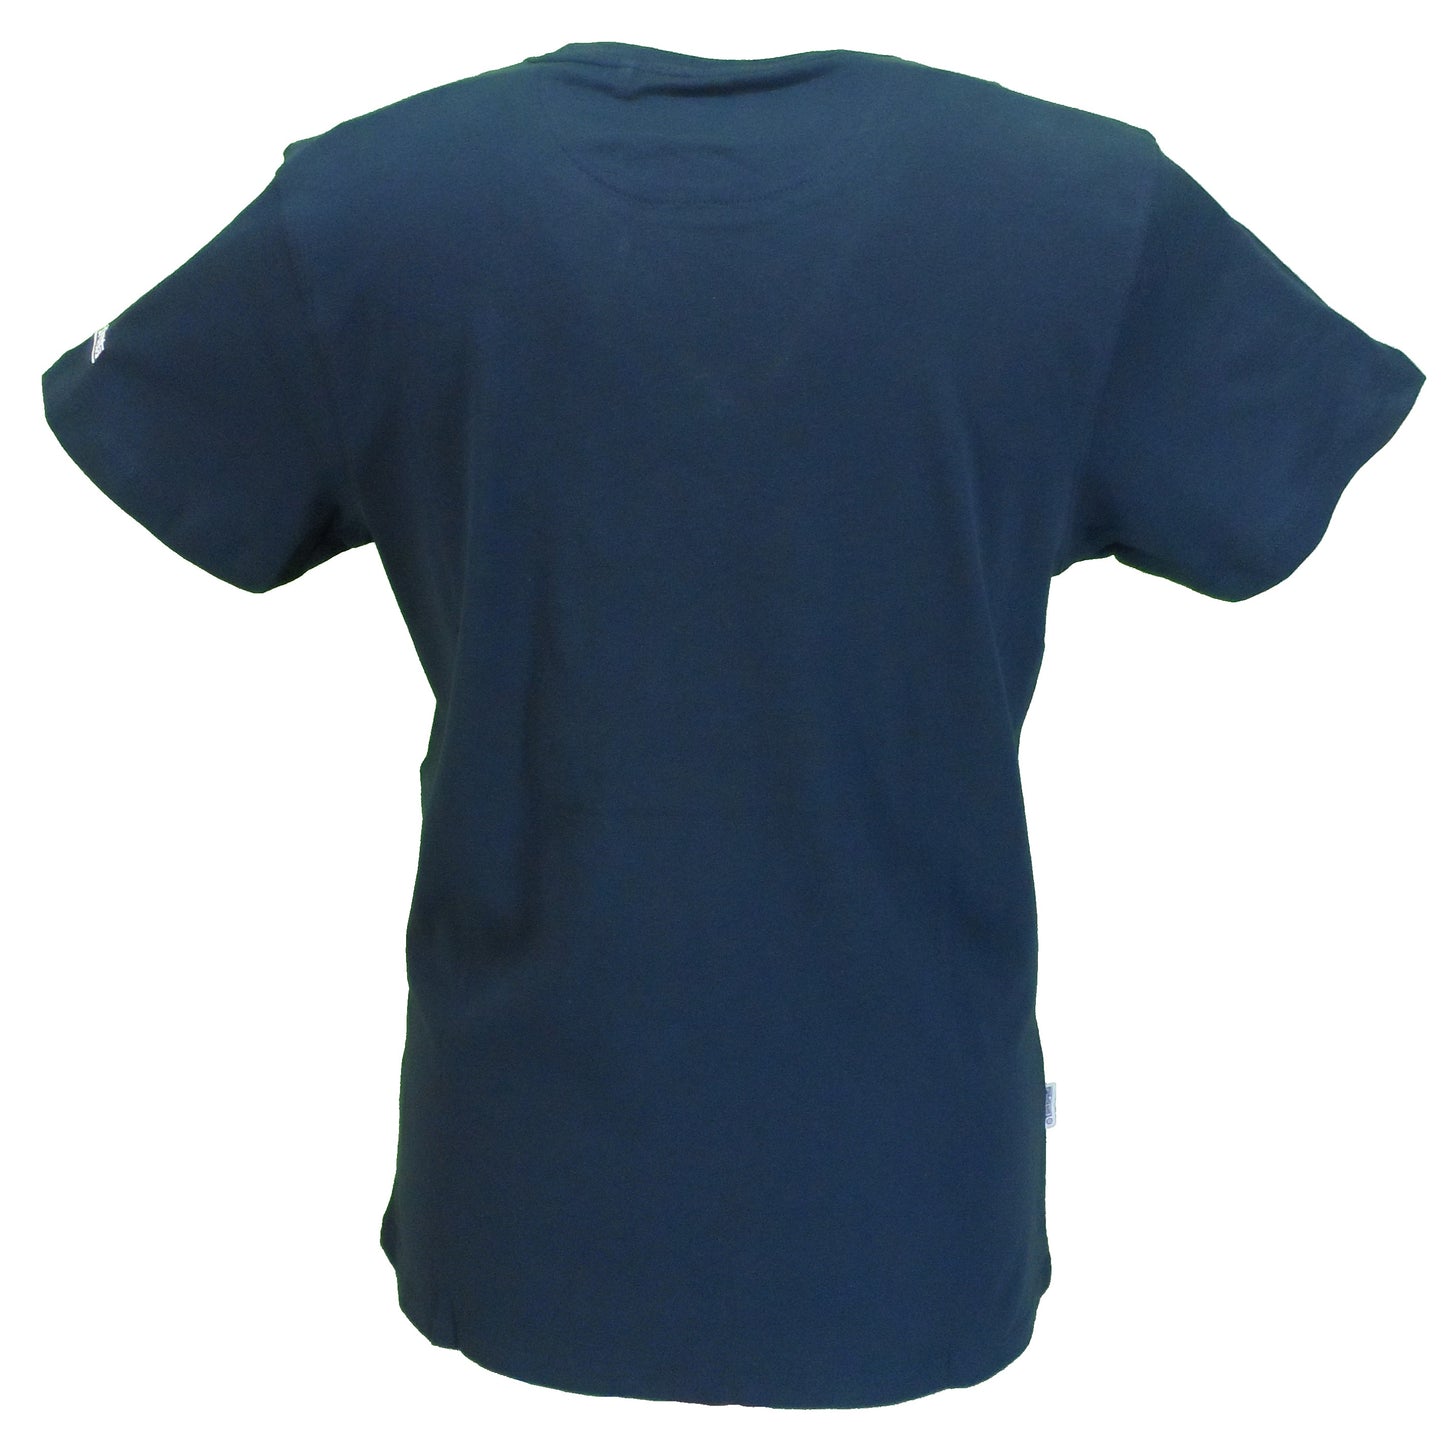 Lambretta camiseta retro 100% algodón azul marino para hombre